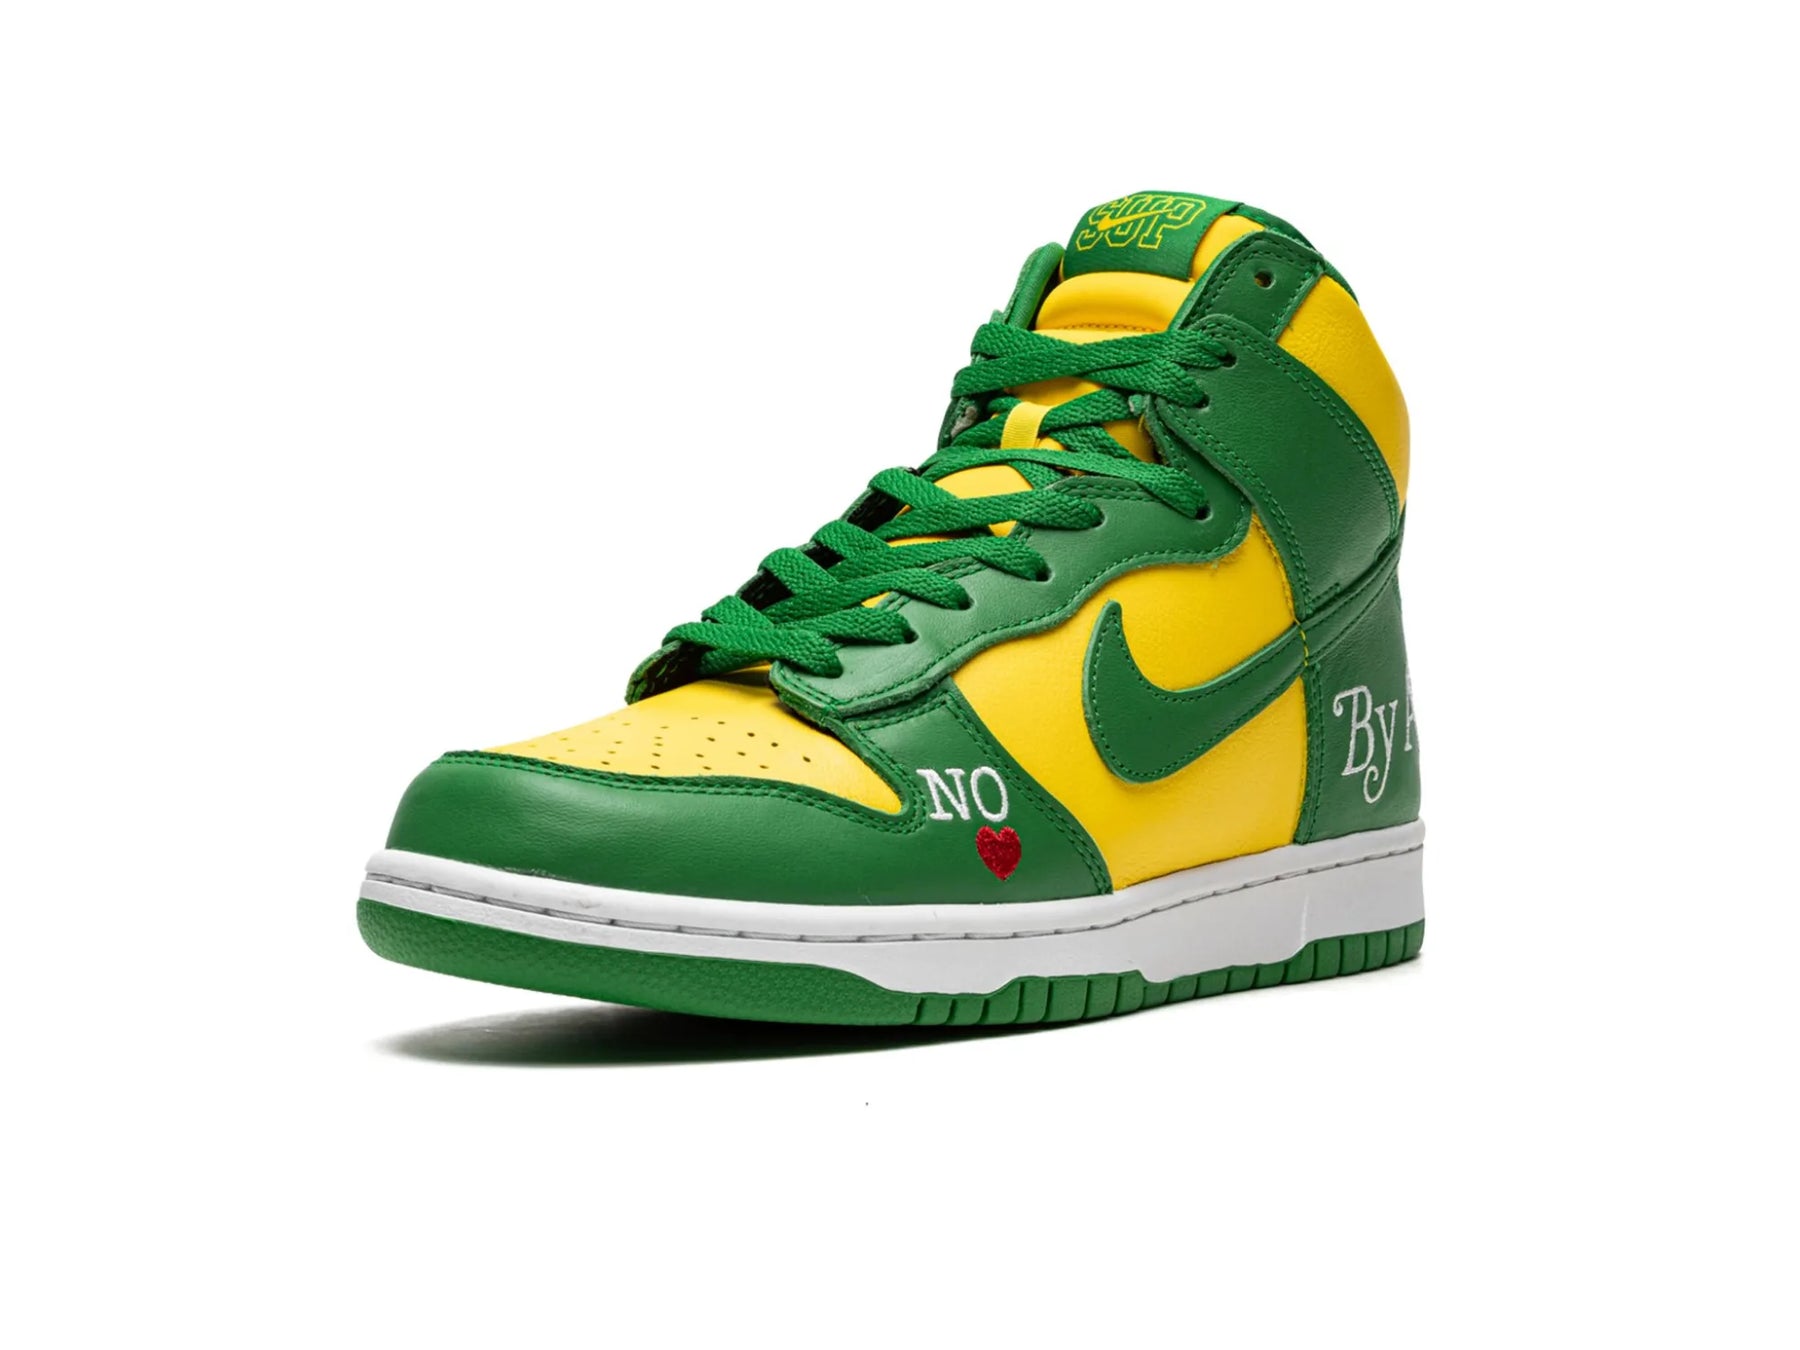 Nike Dunk High SB x Supreme "By Any Means Brazil" - street-bill.dk